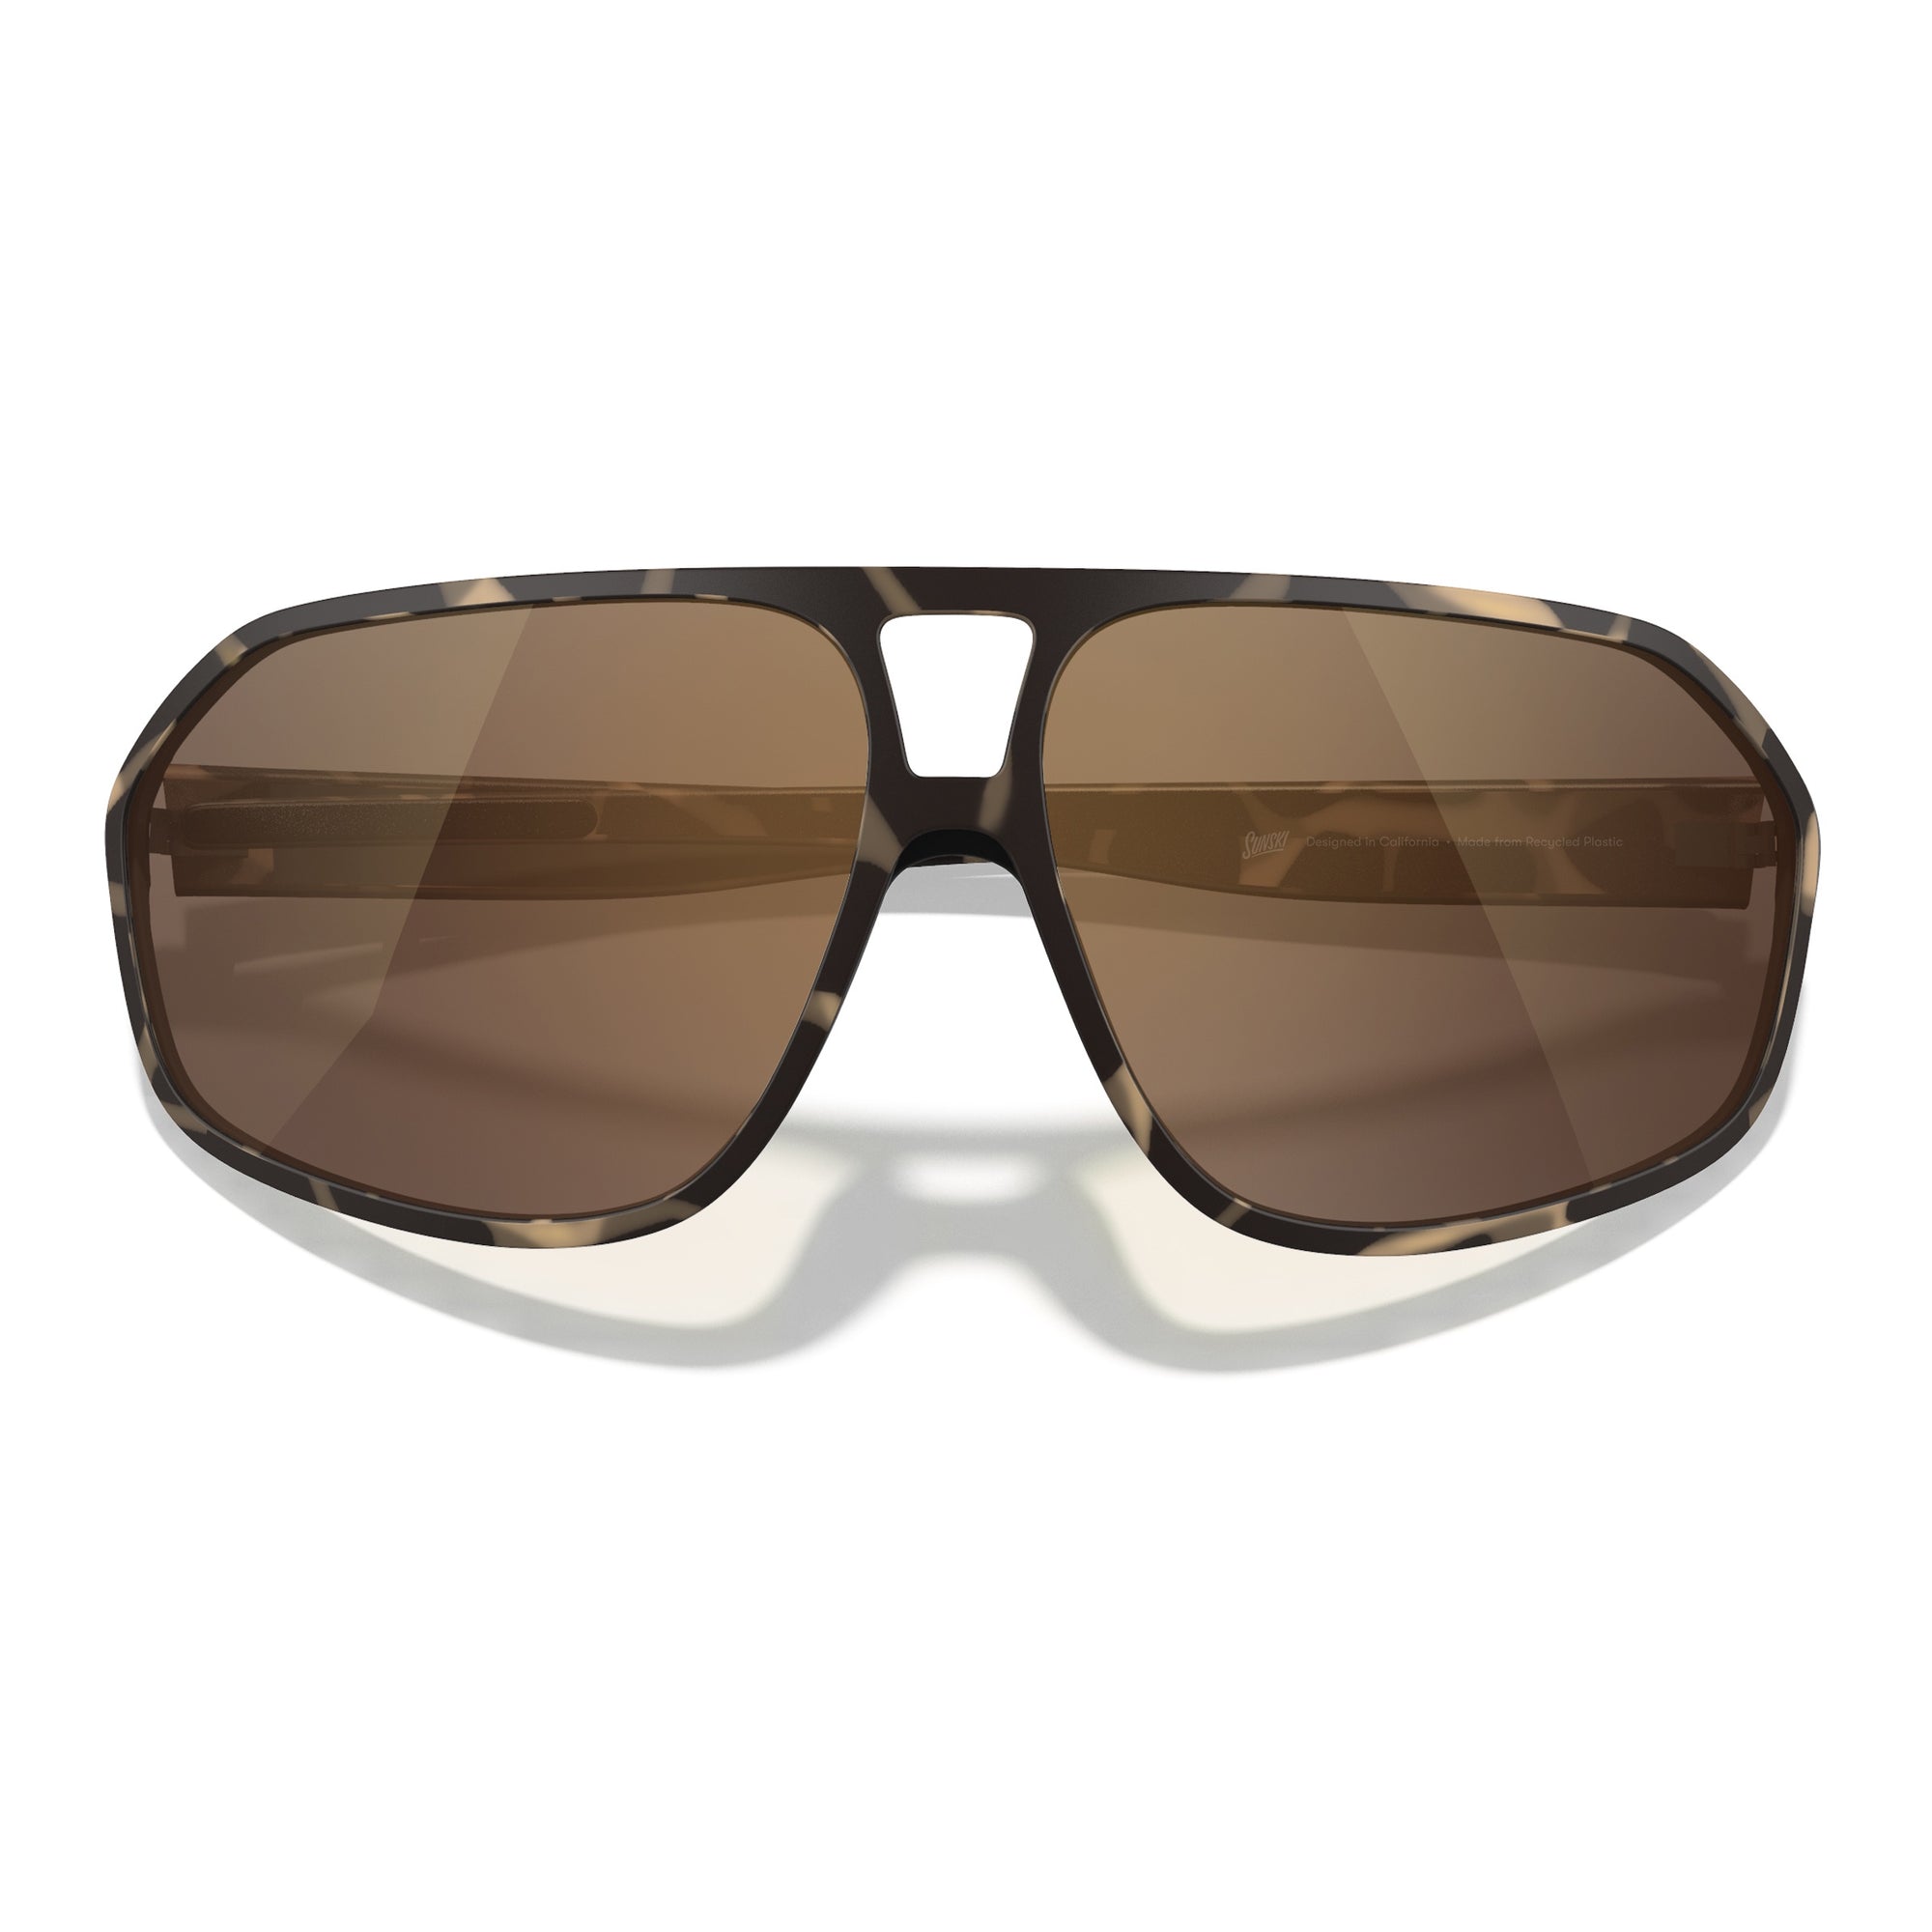 SUNSKI Sunglasses - Velo Tortoise Bronze